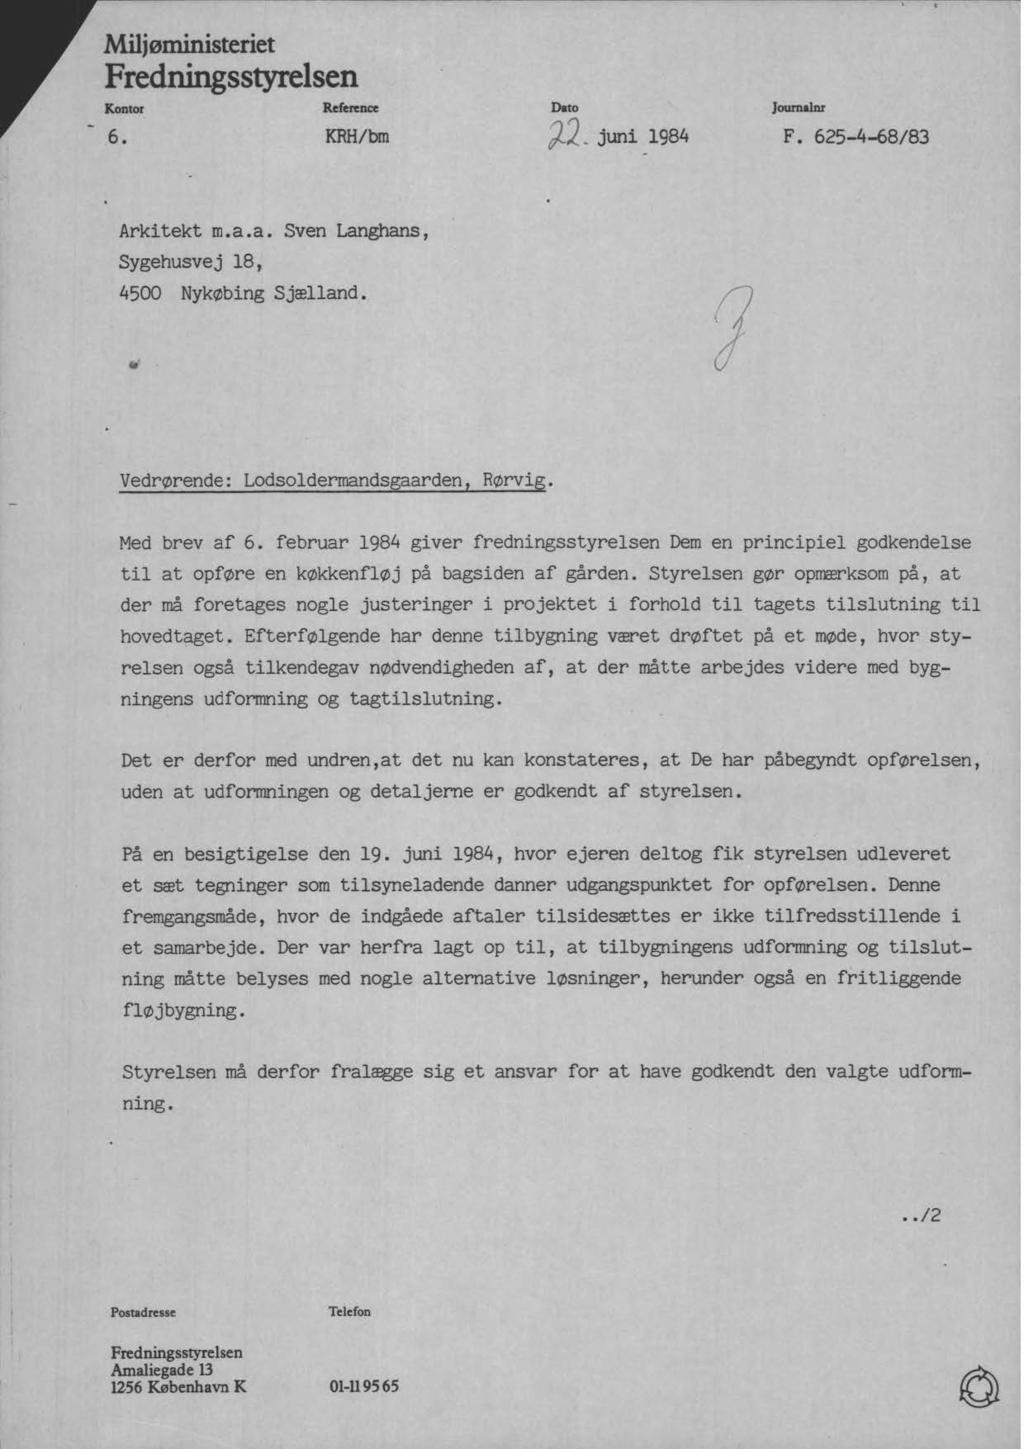 Mijøministeriet Fredningsstyresen Kontor Reference 6. KRH/bm Dato ')2 _ juni 1984 }oumanr F. 625-4-68/83 Arkitekt m.a.a. Sven Langhans, Sygehusvej 18, 4500 Nykøbing Sjæand.